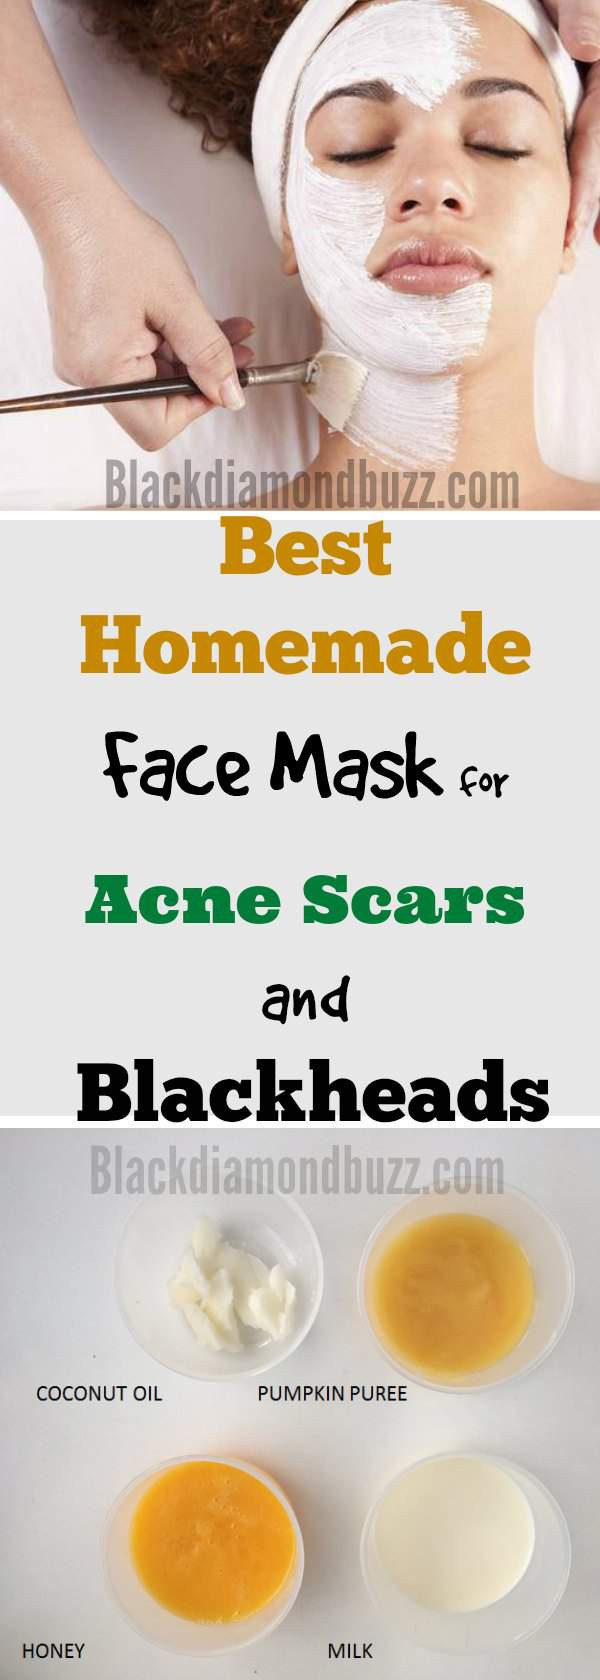 DIY Facemask For Pimples
 DIY Face Mask for Acne 7 Best Homemade Face Masks